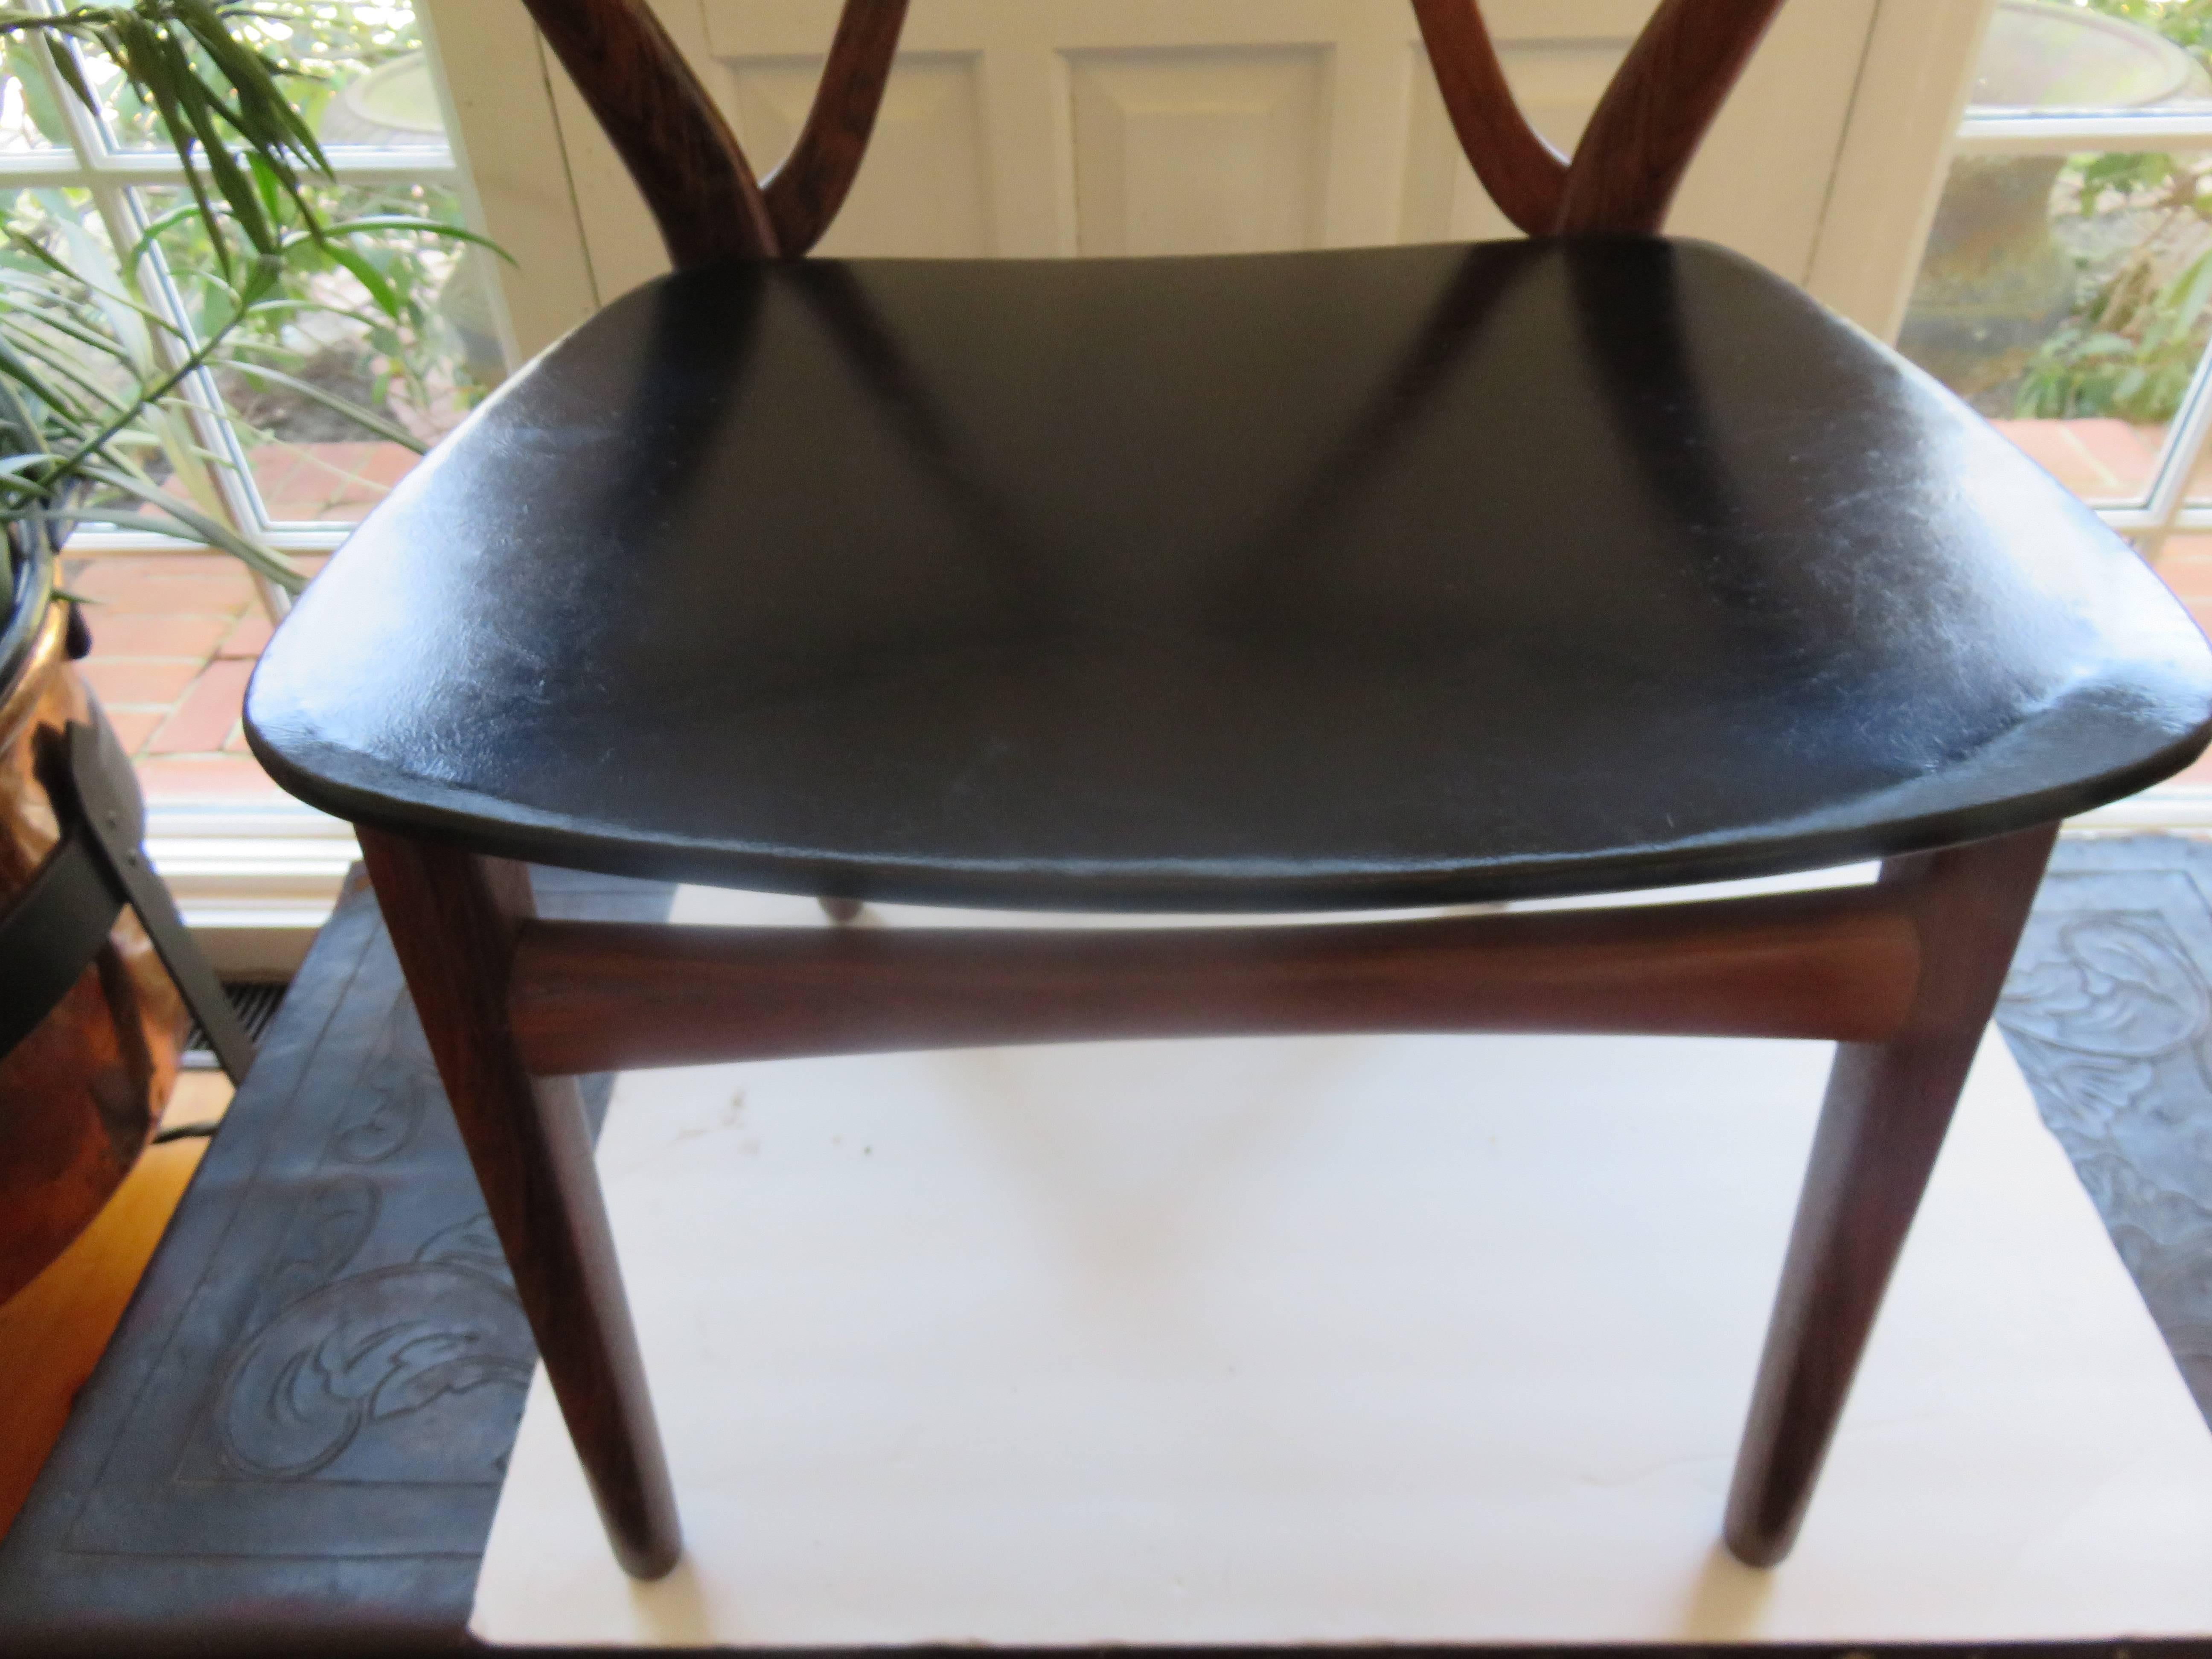 A Danish modern Mid-Century teak dining room chair by Kjjaernulf Henning for Bruno Hansen. Lovely original condition, black faux leather seat.